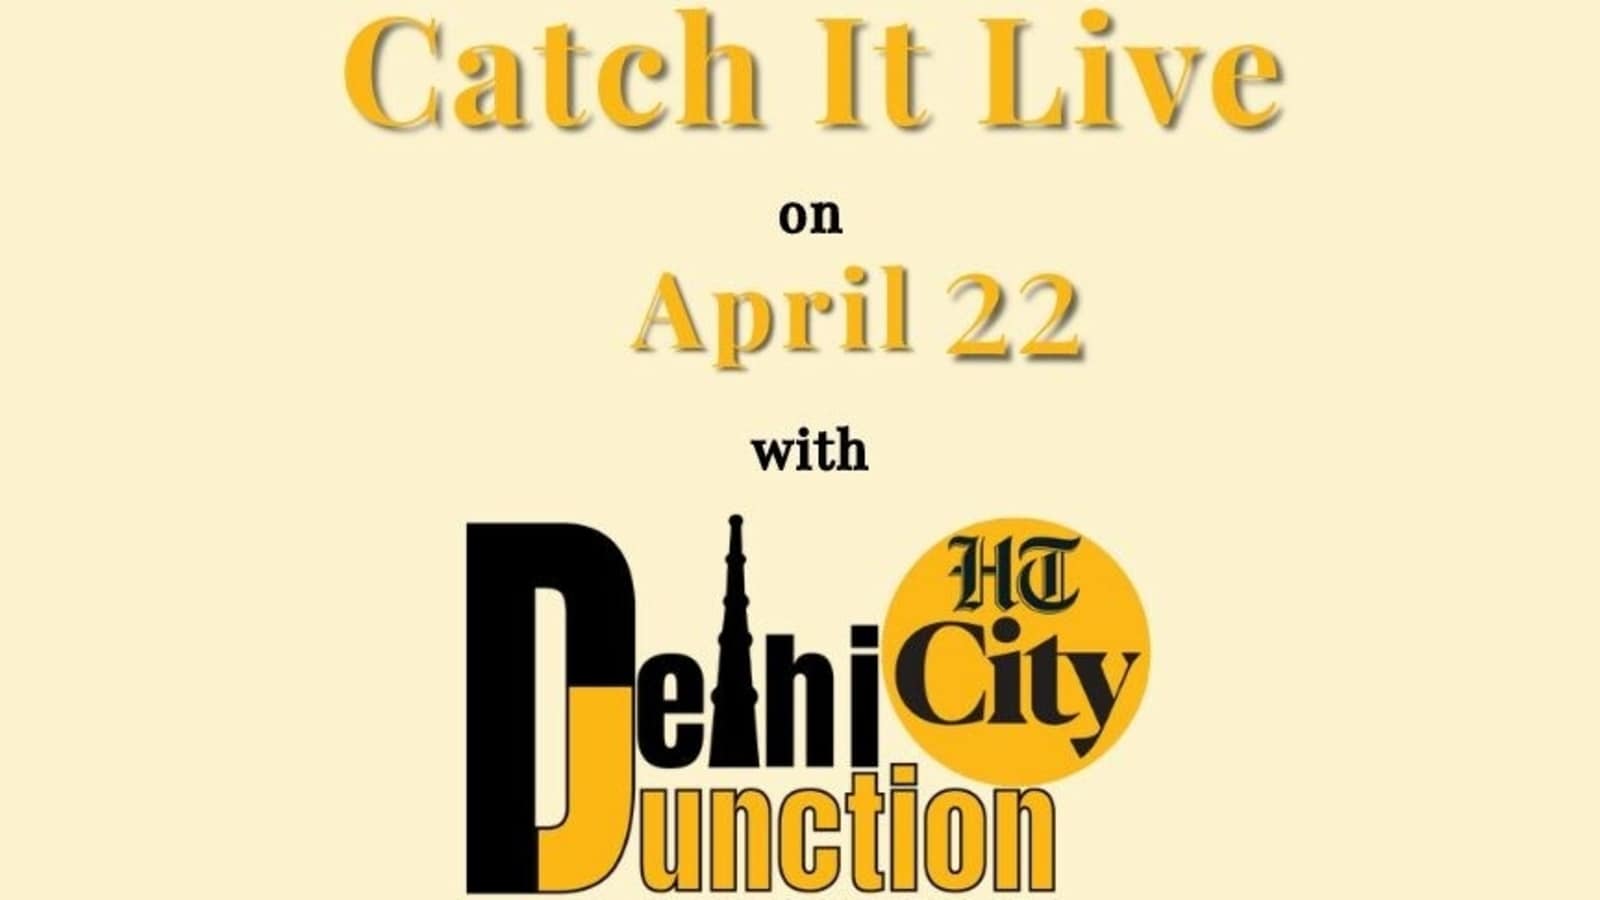 एचटी सिटी दिल्ली जंक्शन: 22 अप्रैल को कैच इट लाइव